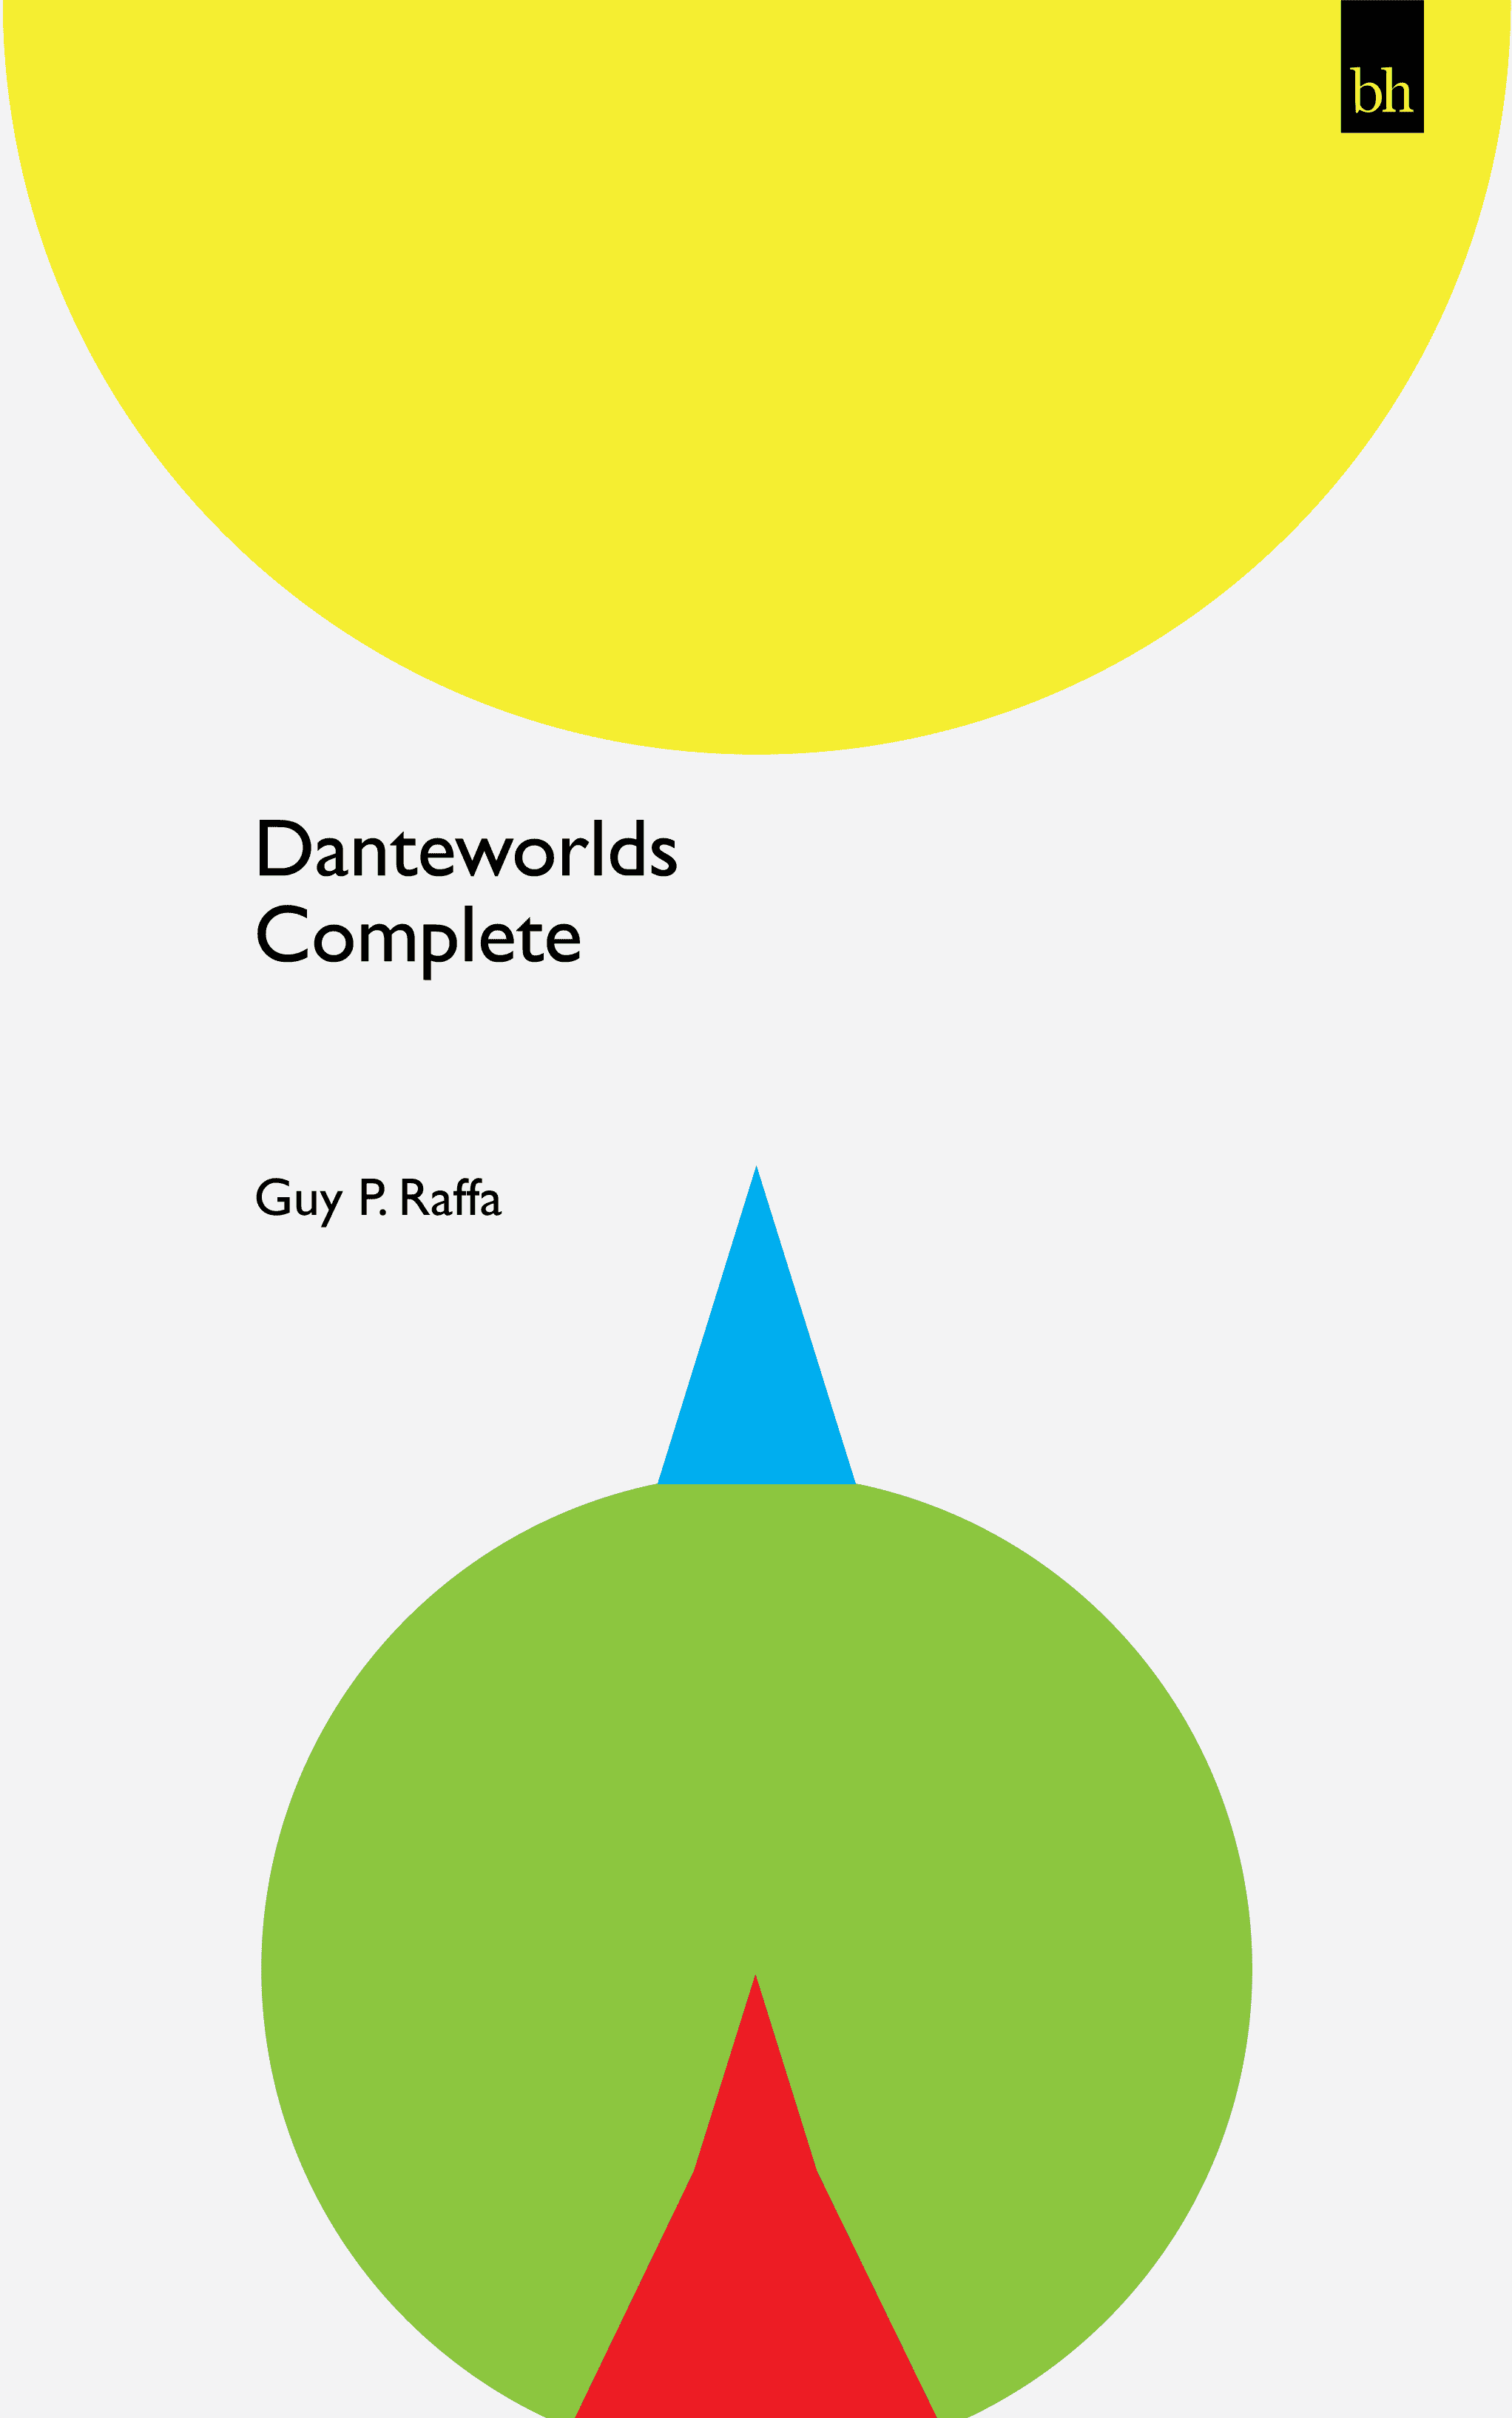 Danteworlds: Complete by Guy P. Raffa